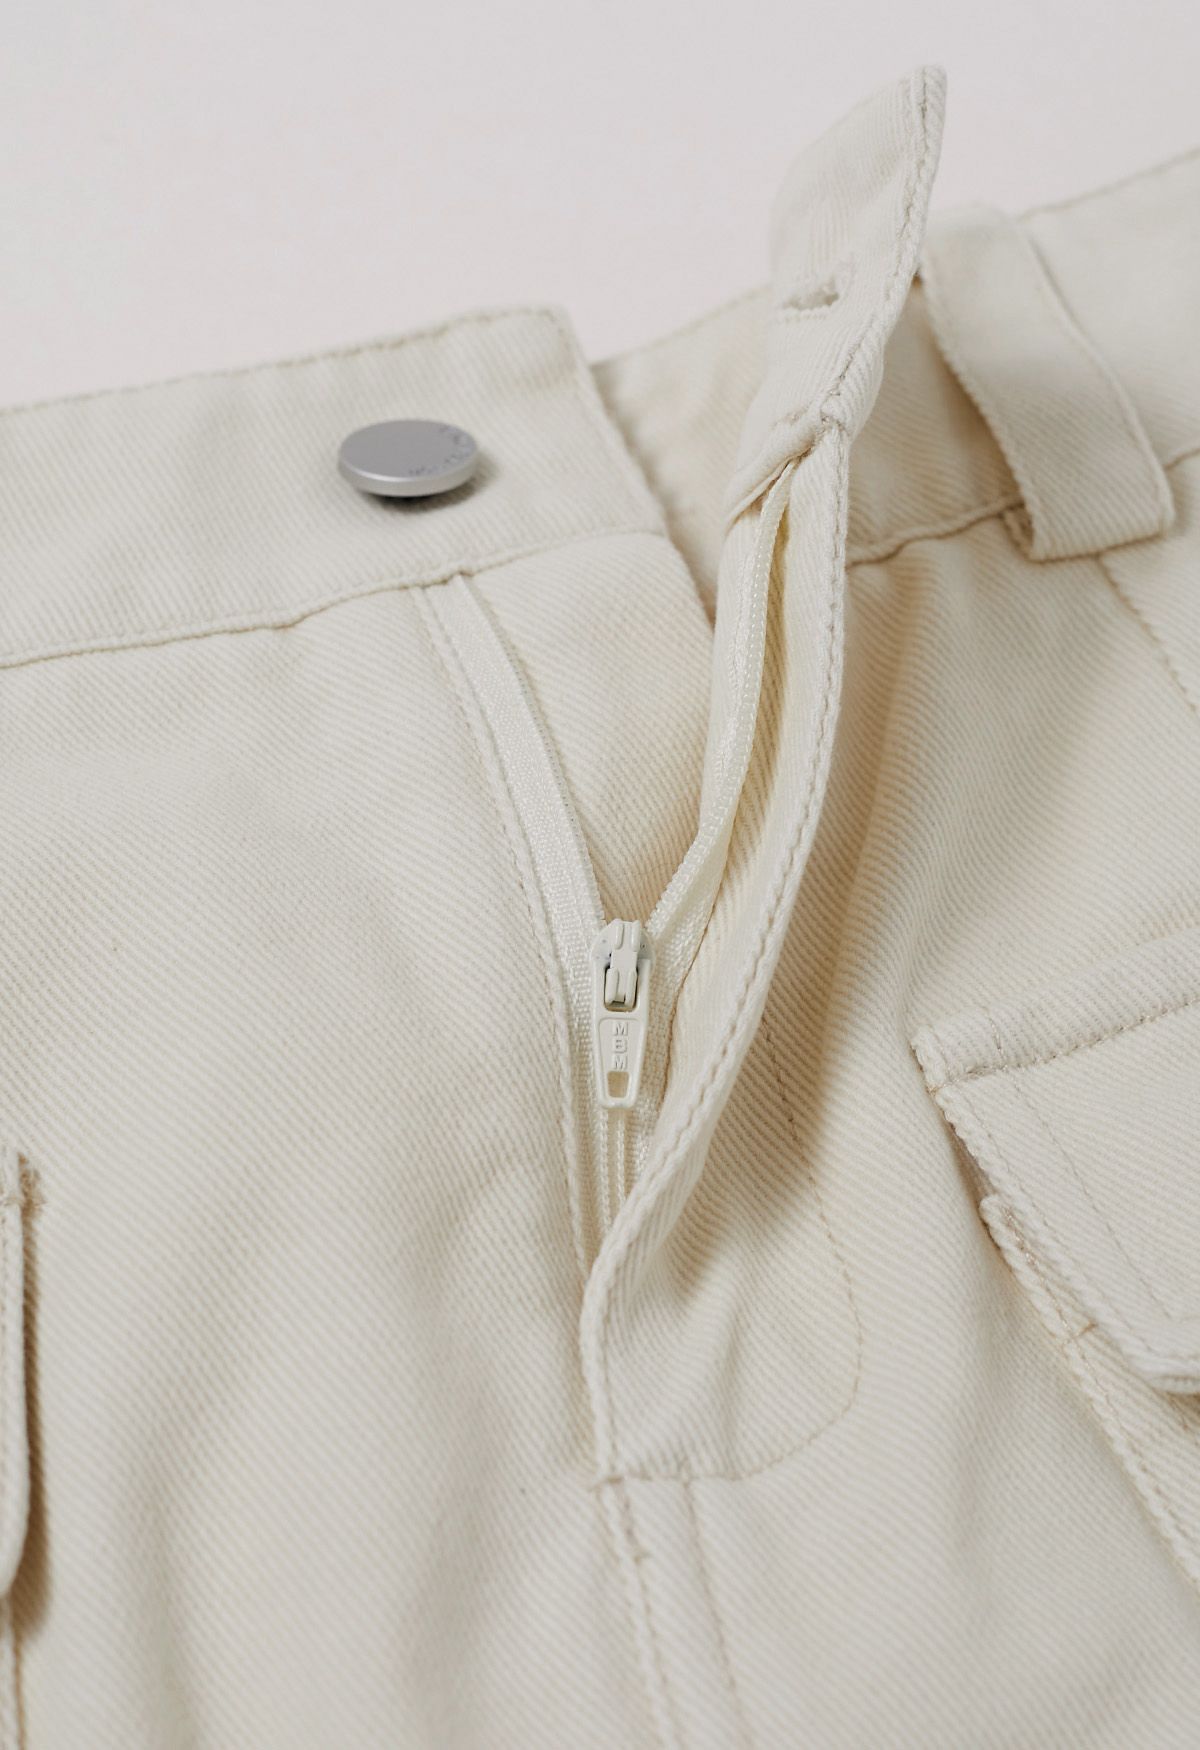 Flap Pocket Denim Mini Skirt with Belt in Ivory